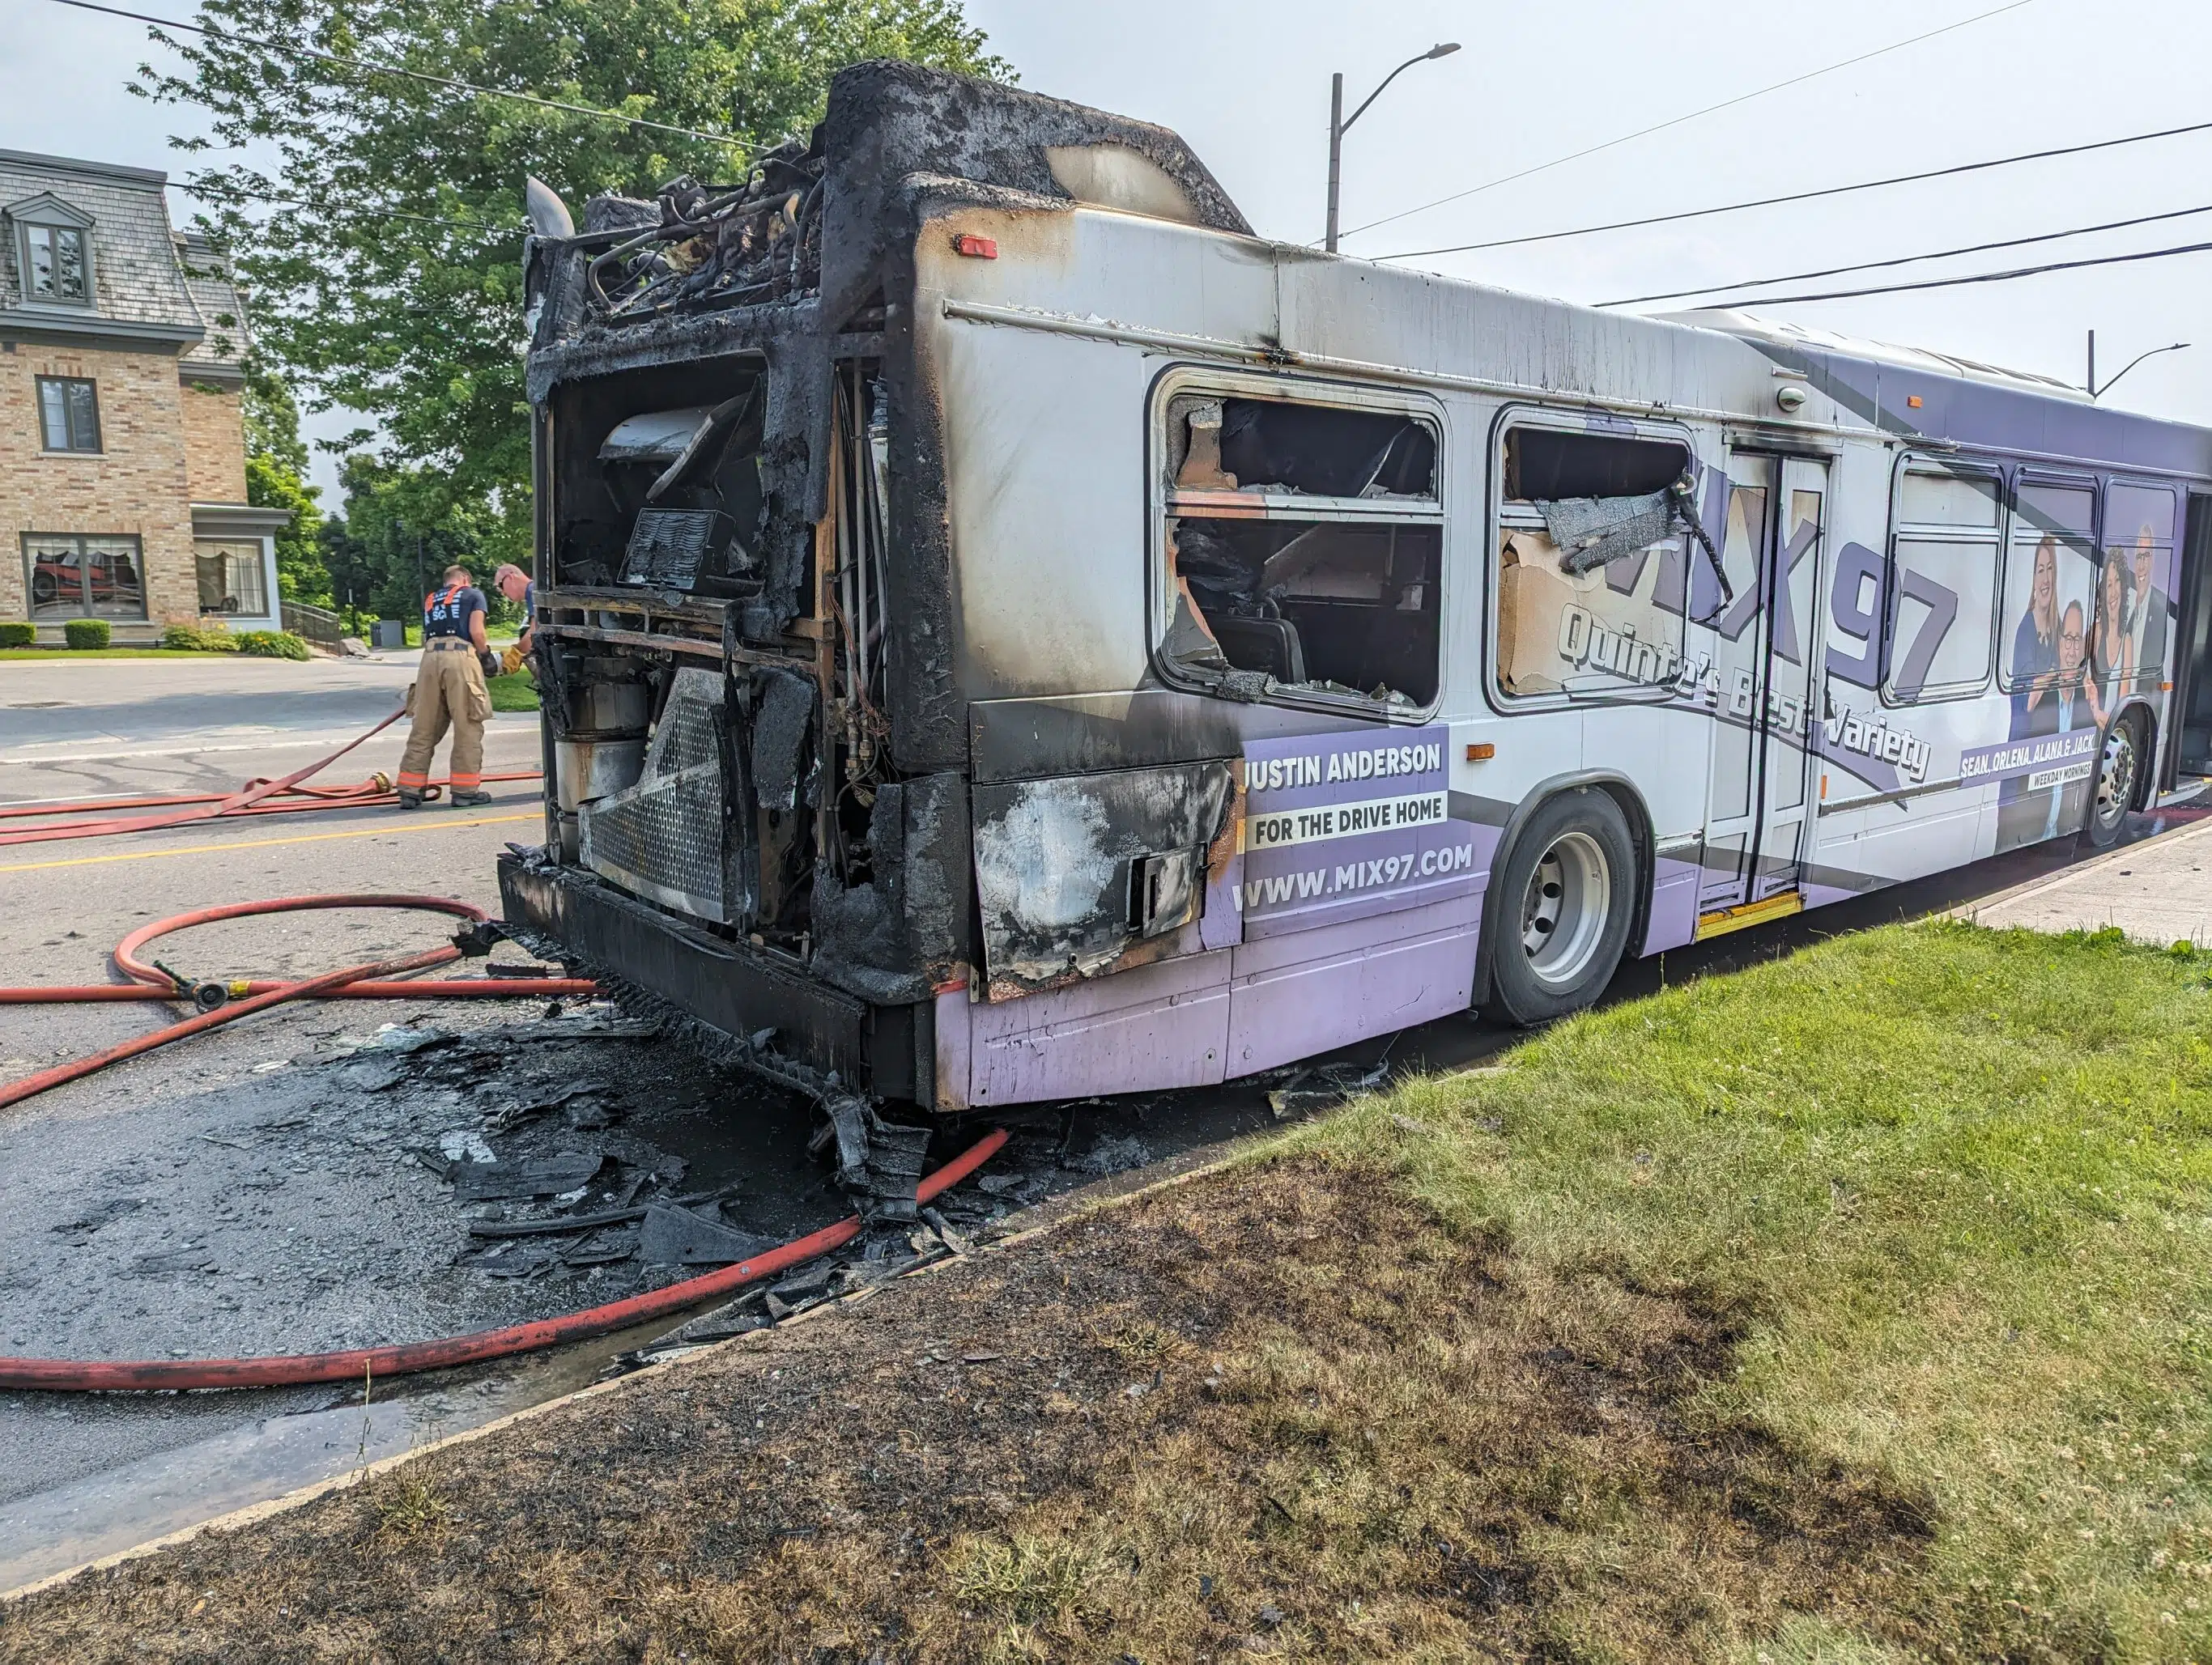 No one hurt in Belleville bus fire